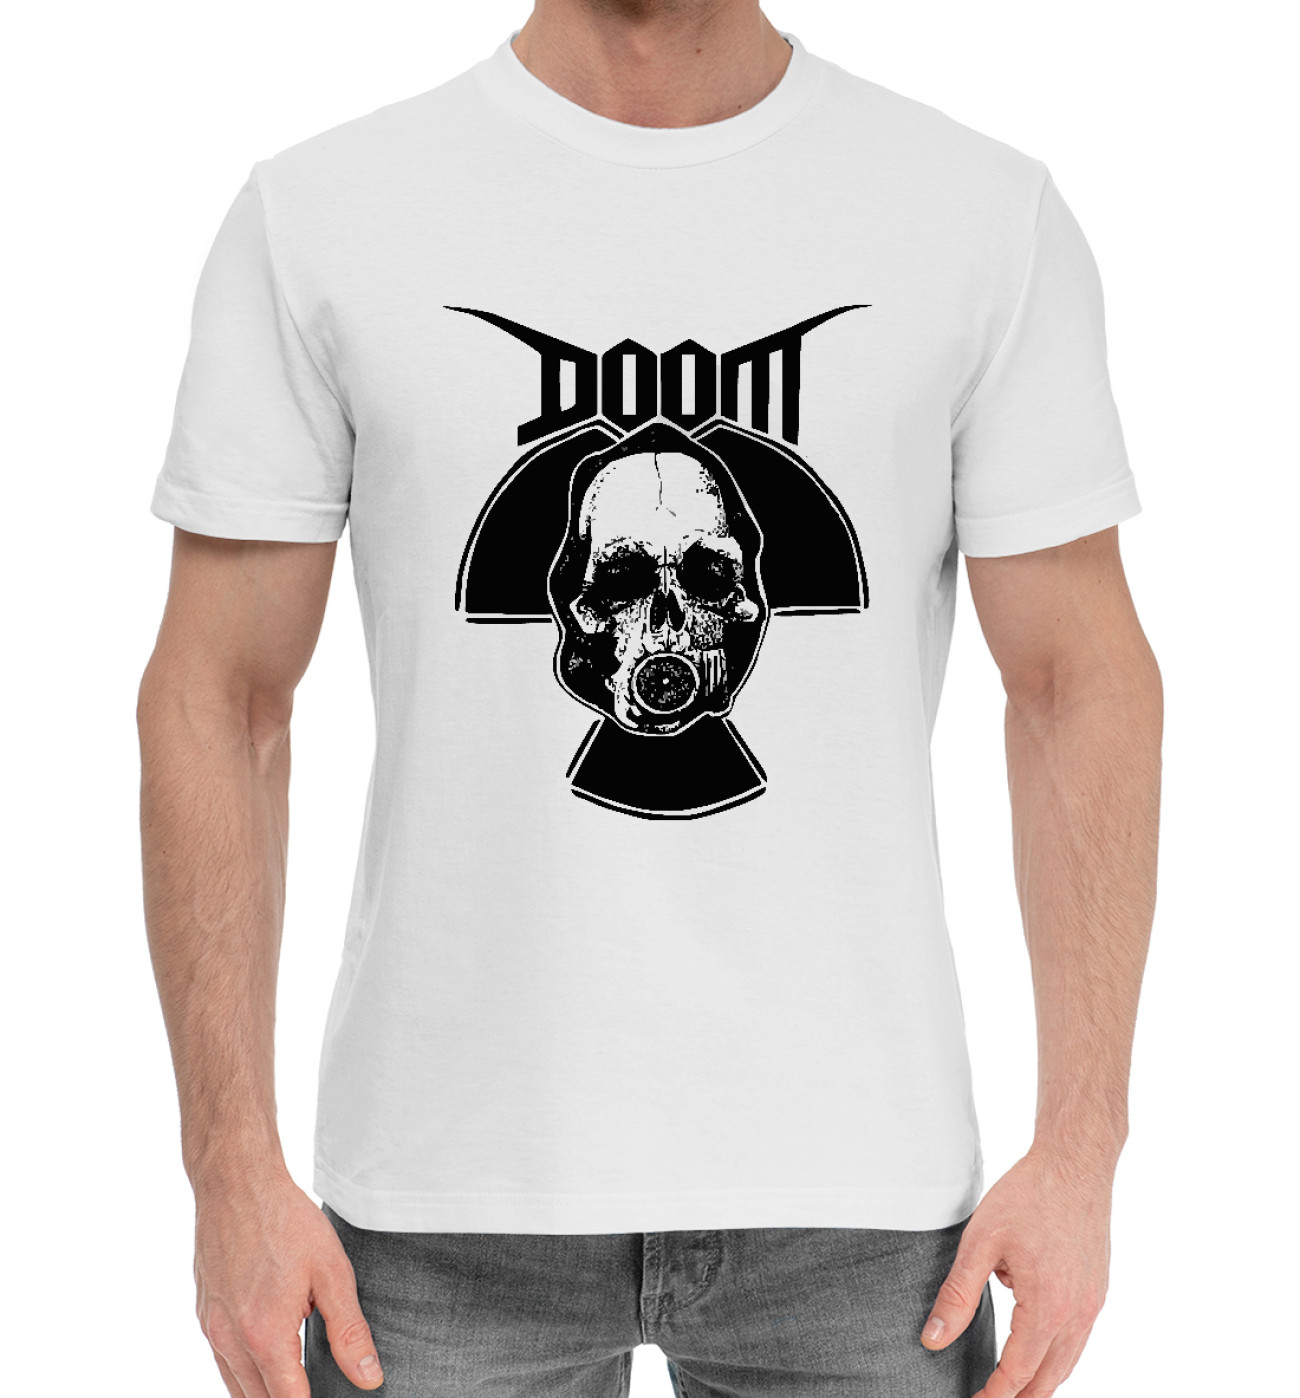 Мужская Хлопковая футболка DOOM Biohazard, артикул: DOO-551791-hfu-2